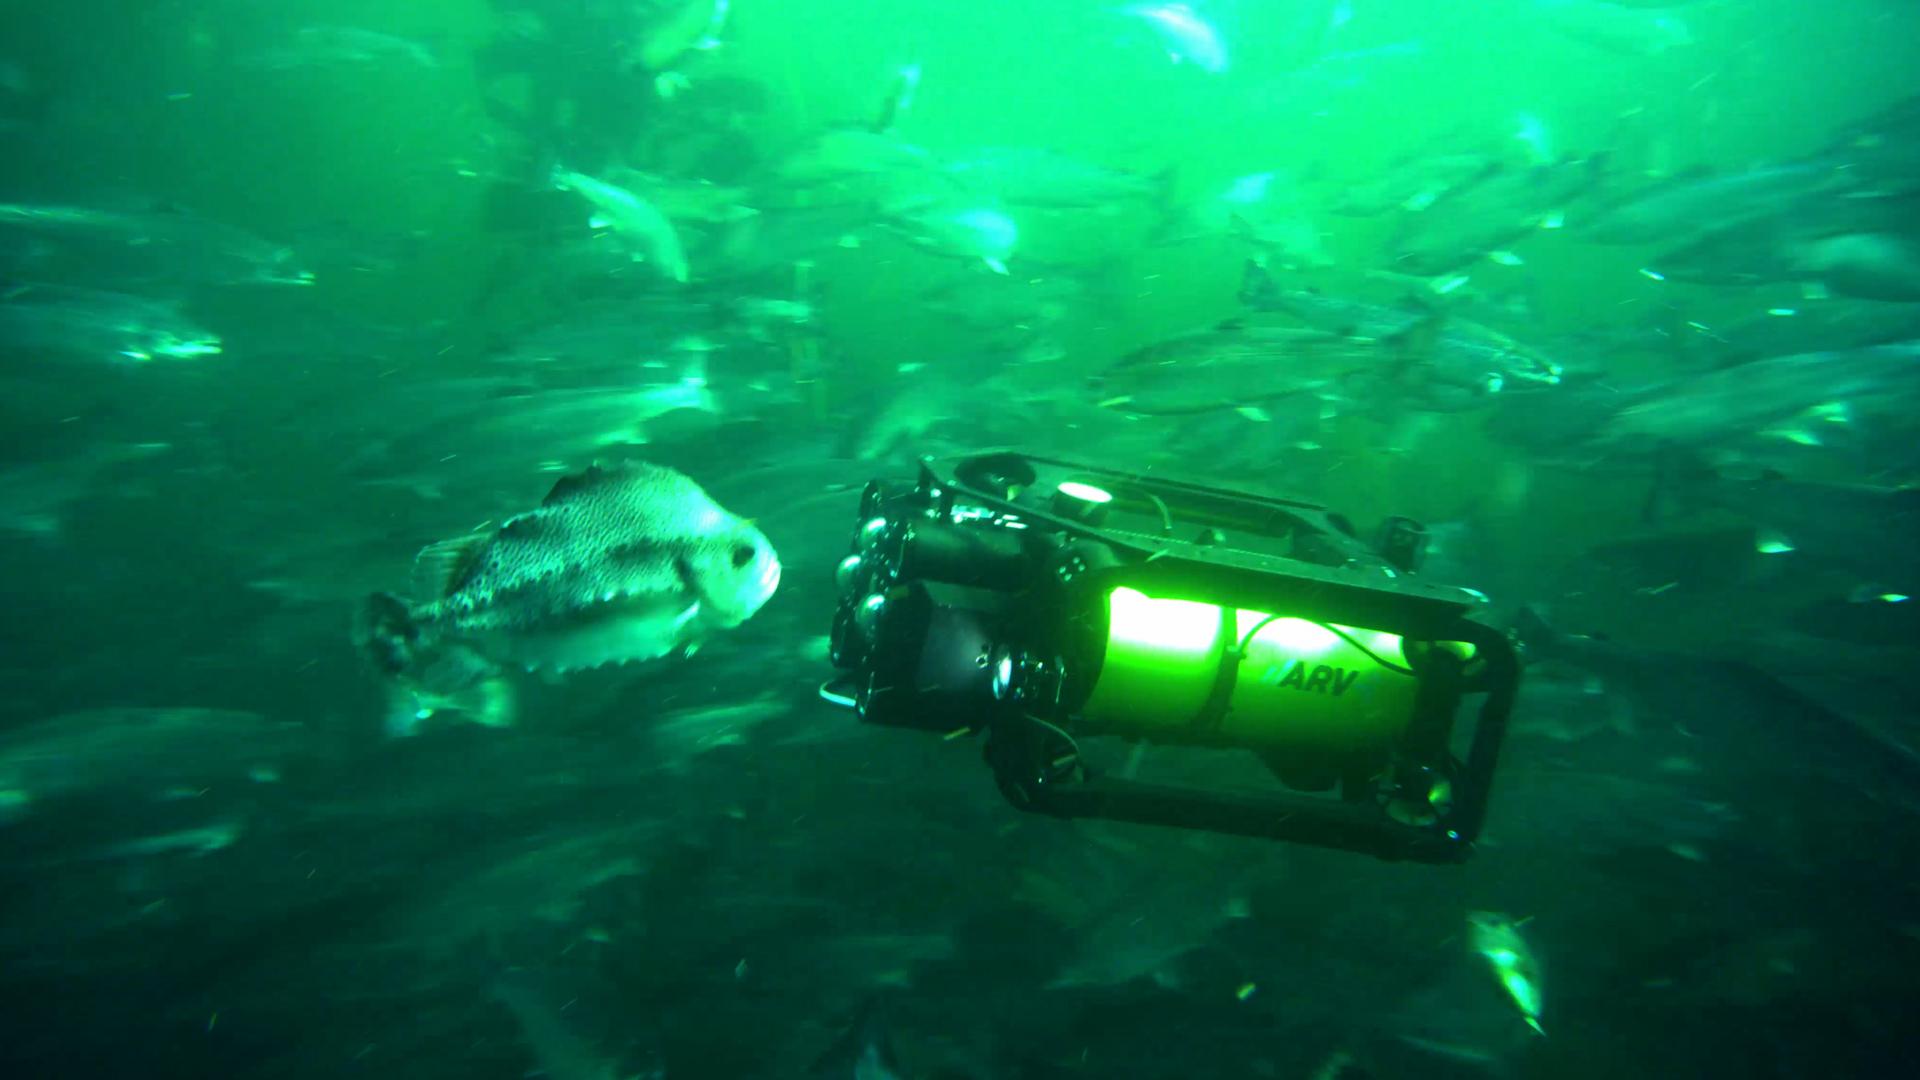 Offshore Wind - SUBC3D - Underwater Drone